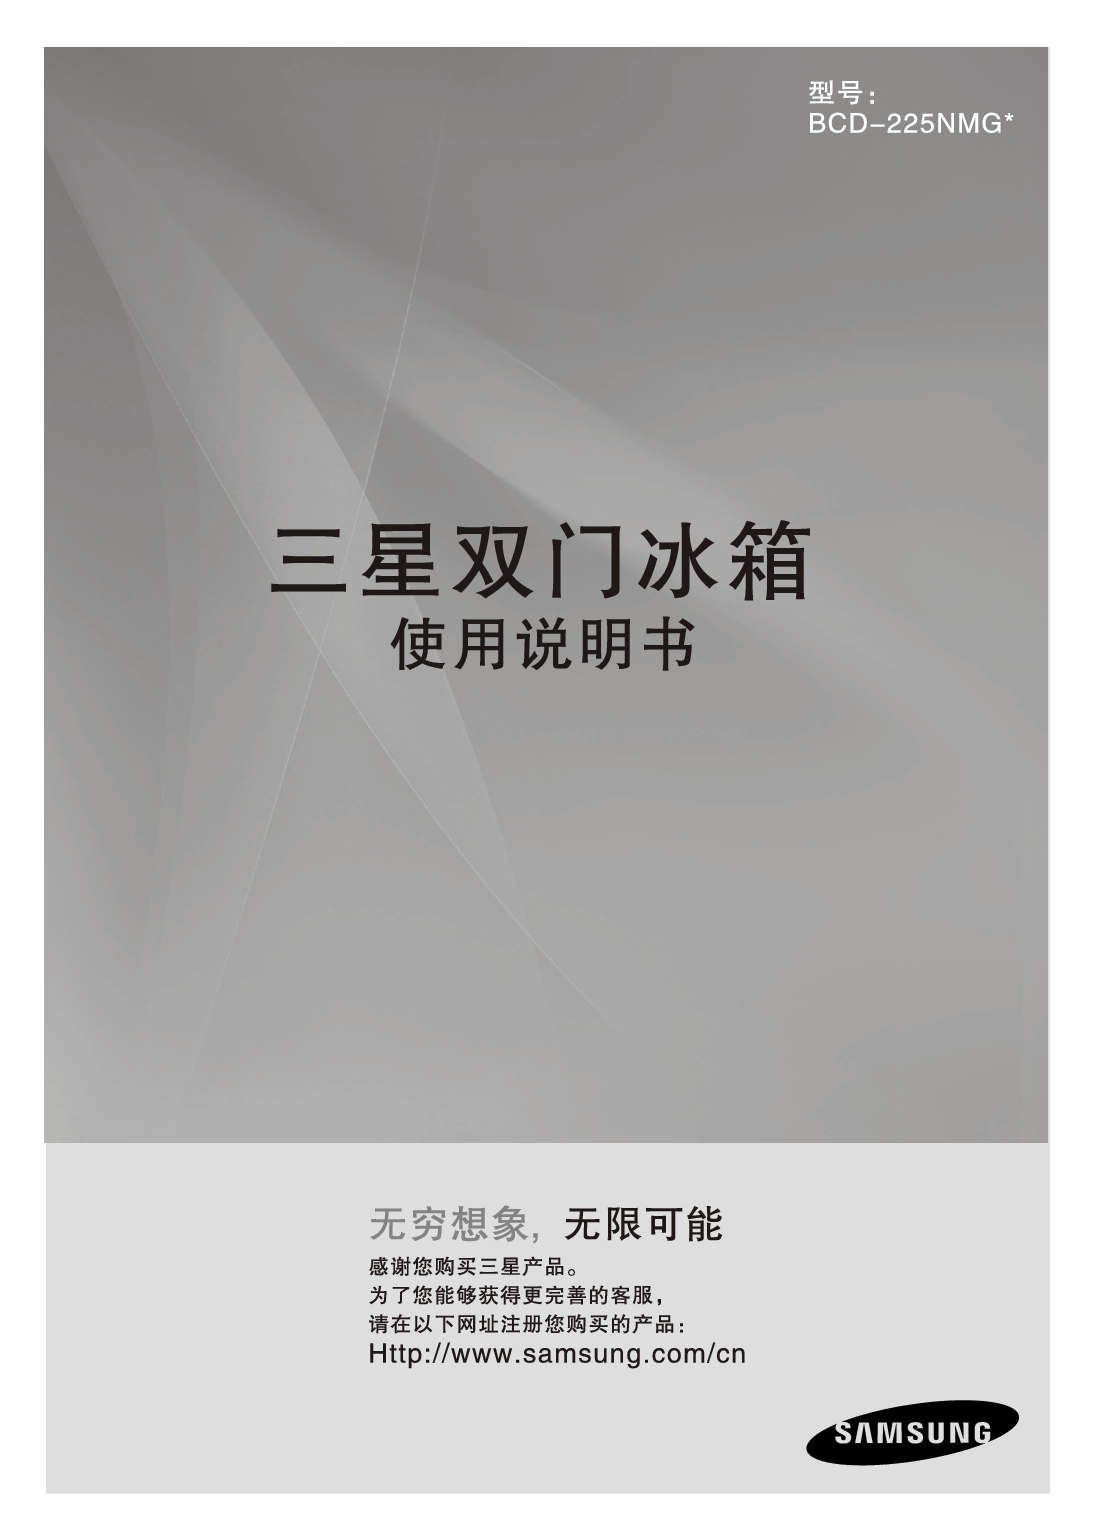 三星 Samsung BCD-225NMG* 使用说明书 封面